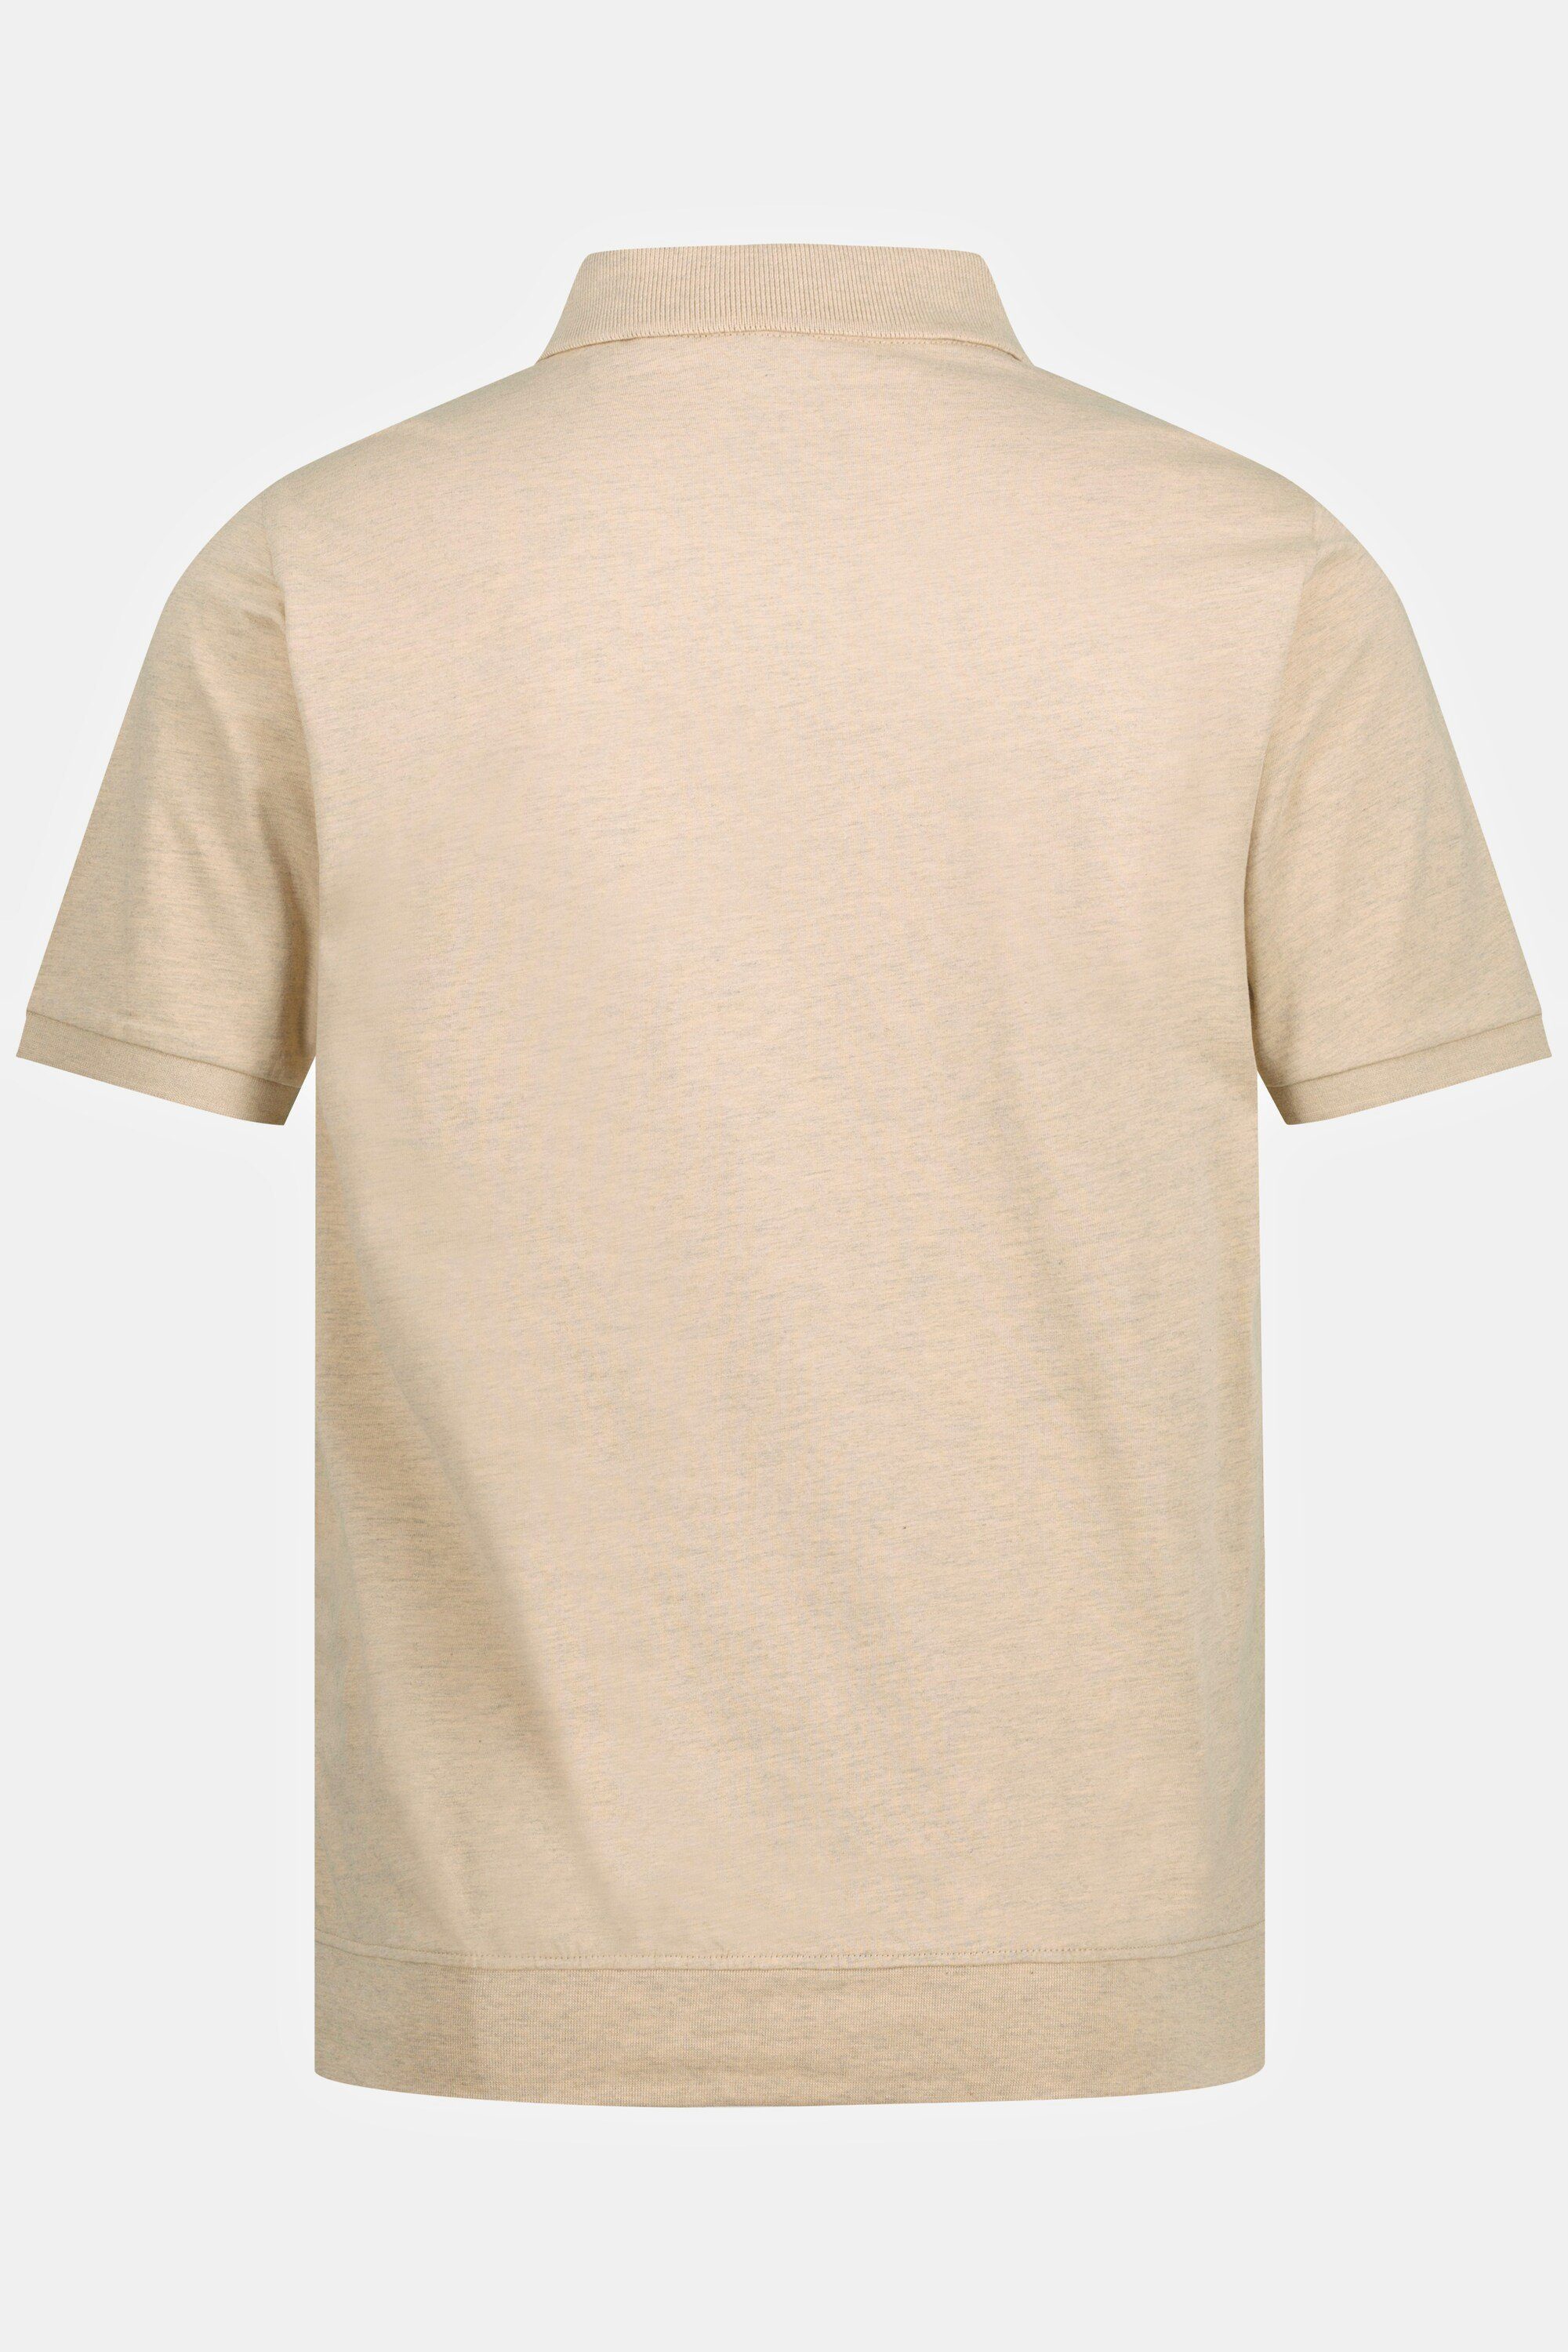 8 bis Halbarm JP1880 sand XL Bauchfit Streifen Poloshirt Poloshirt